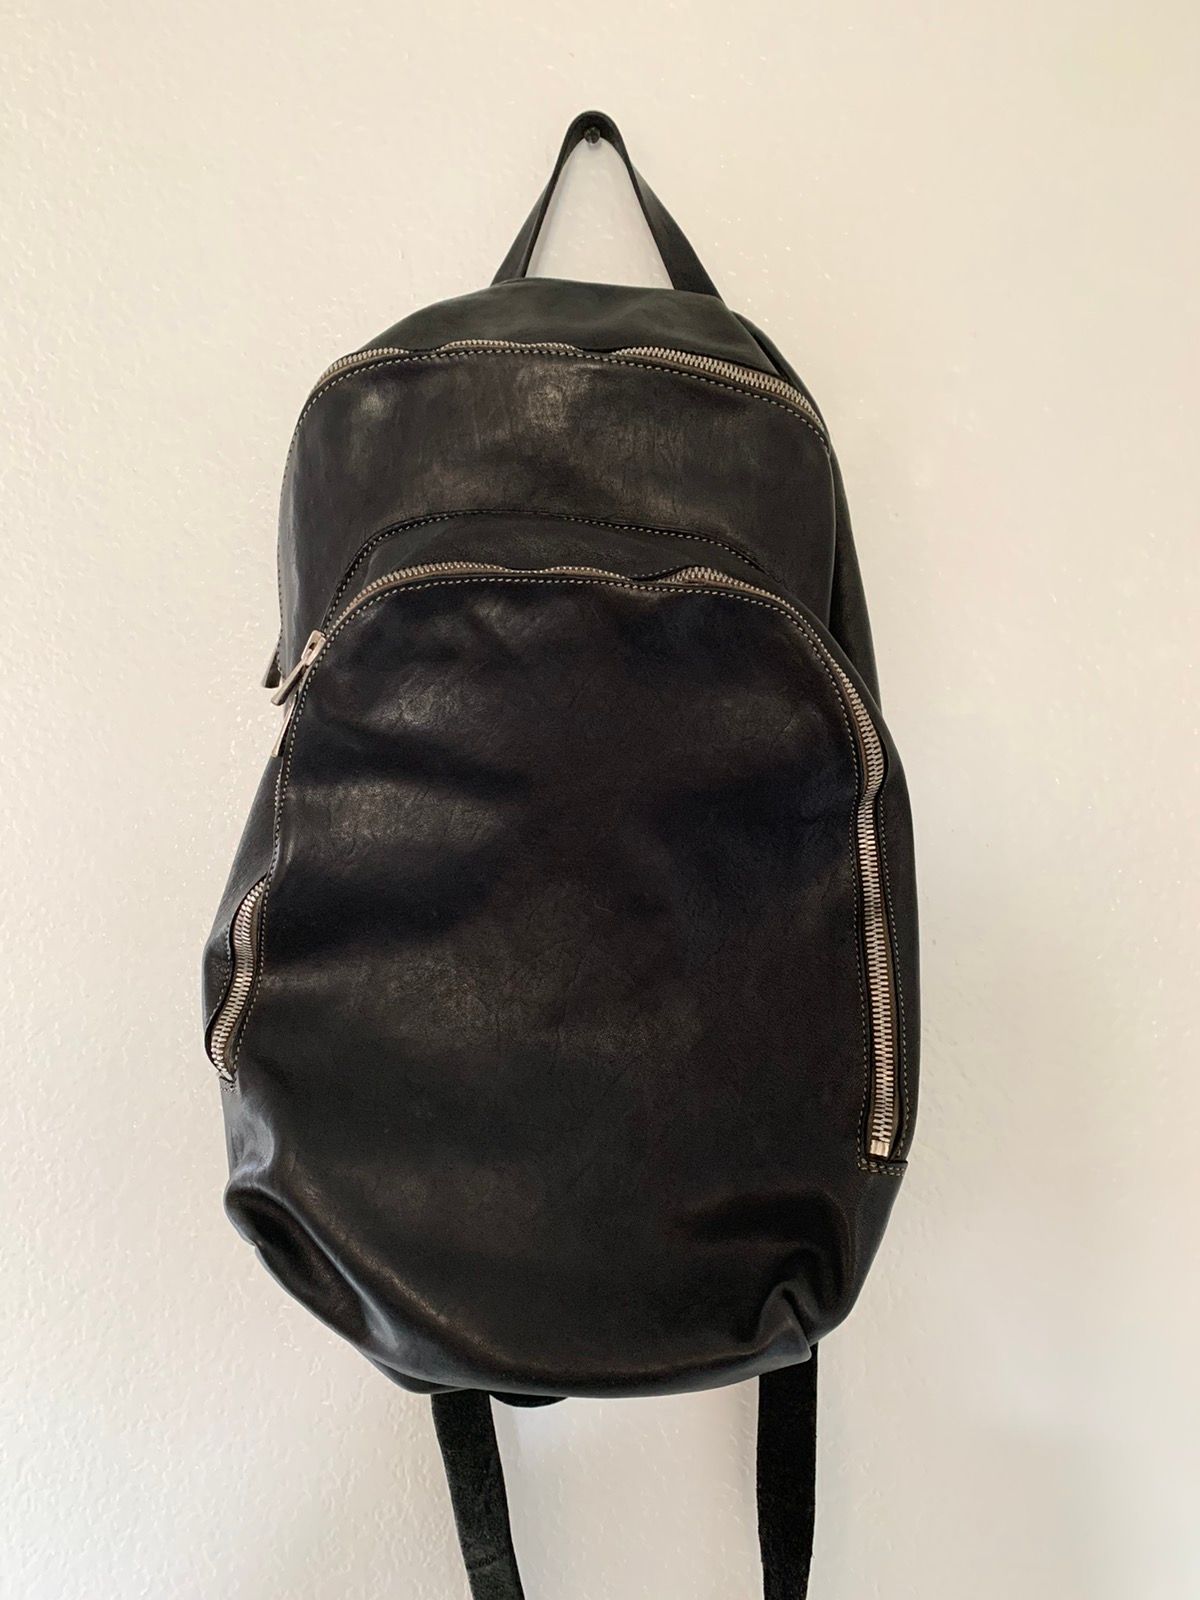 Guidi Guidi 2 pocket backpack 🎒 | Grailed